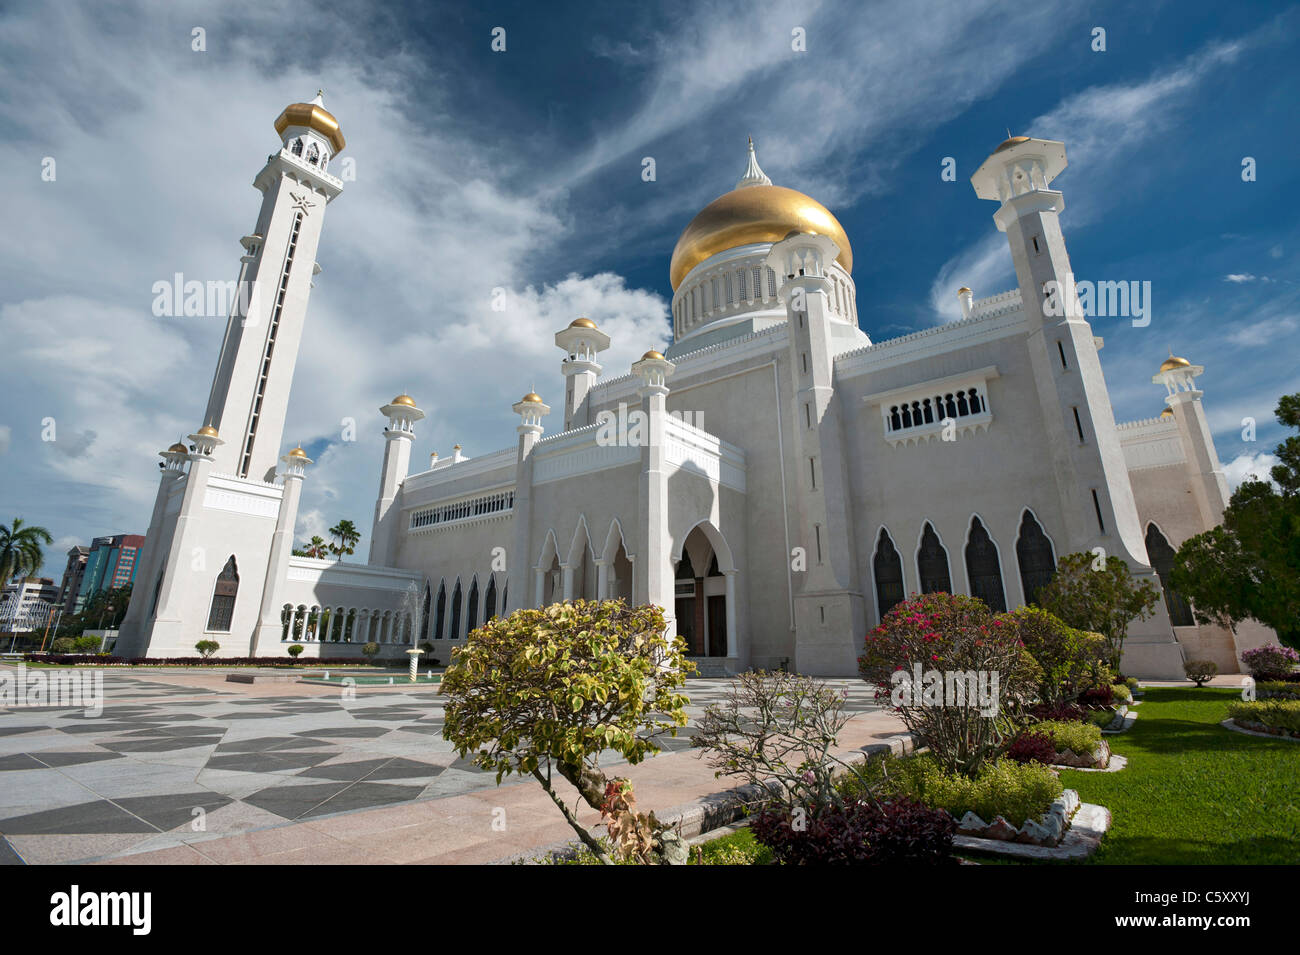 The Sultan Omar Ali Saifuddin Mosque in Bandar Seri Begawan, Brunei Stock Photo